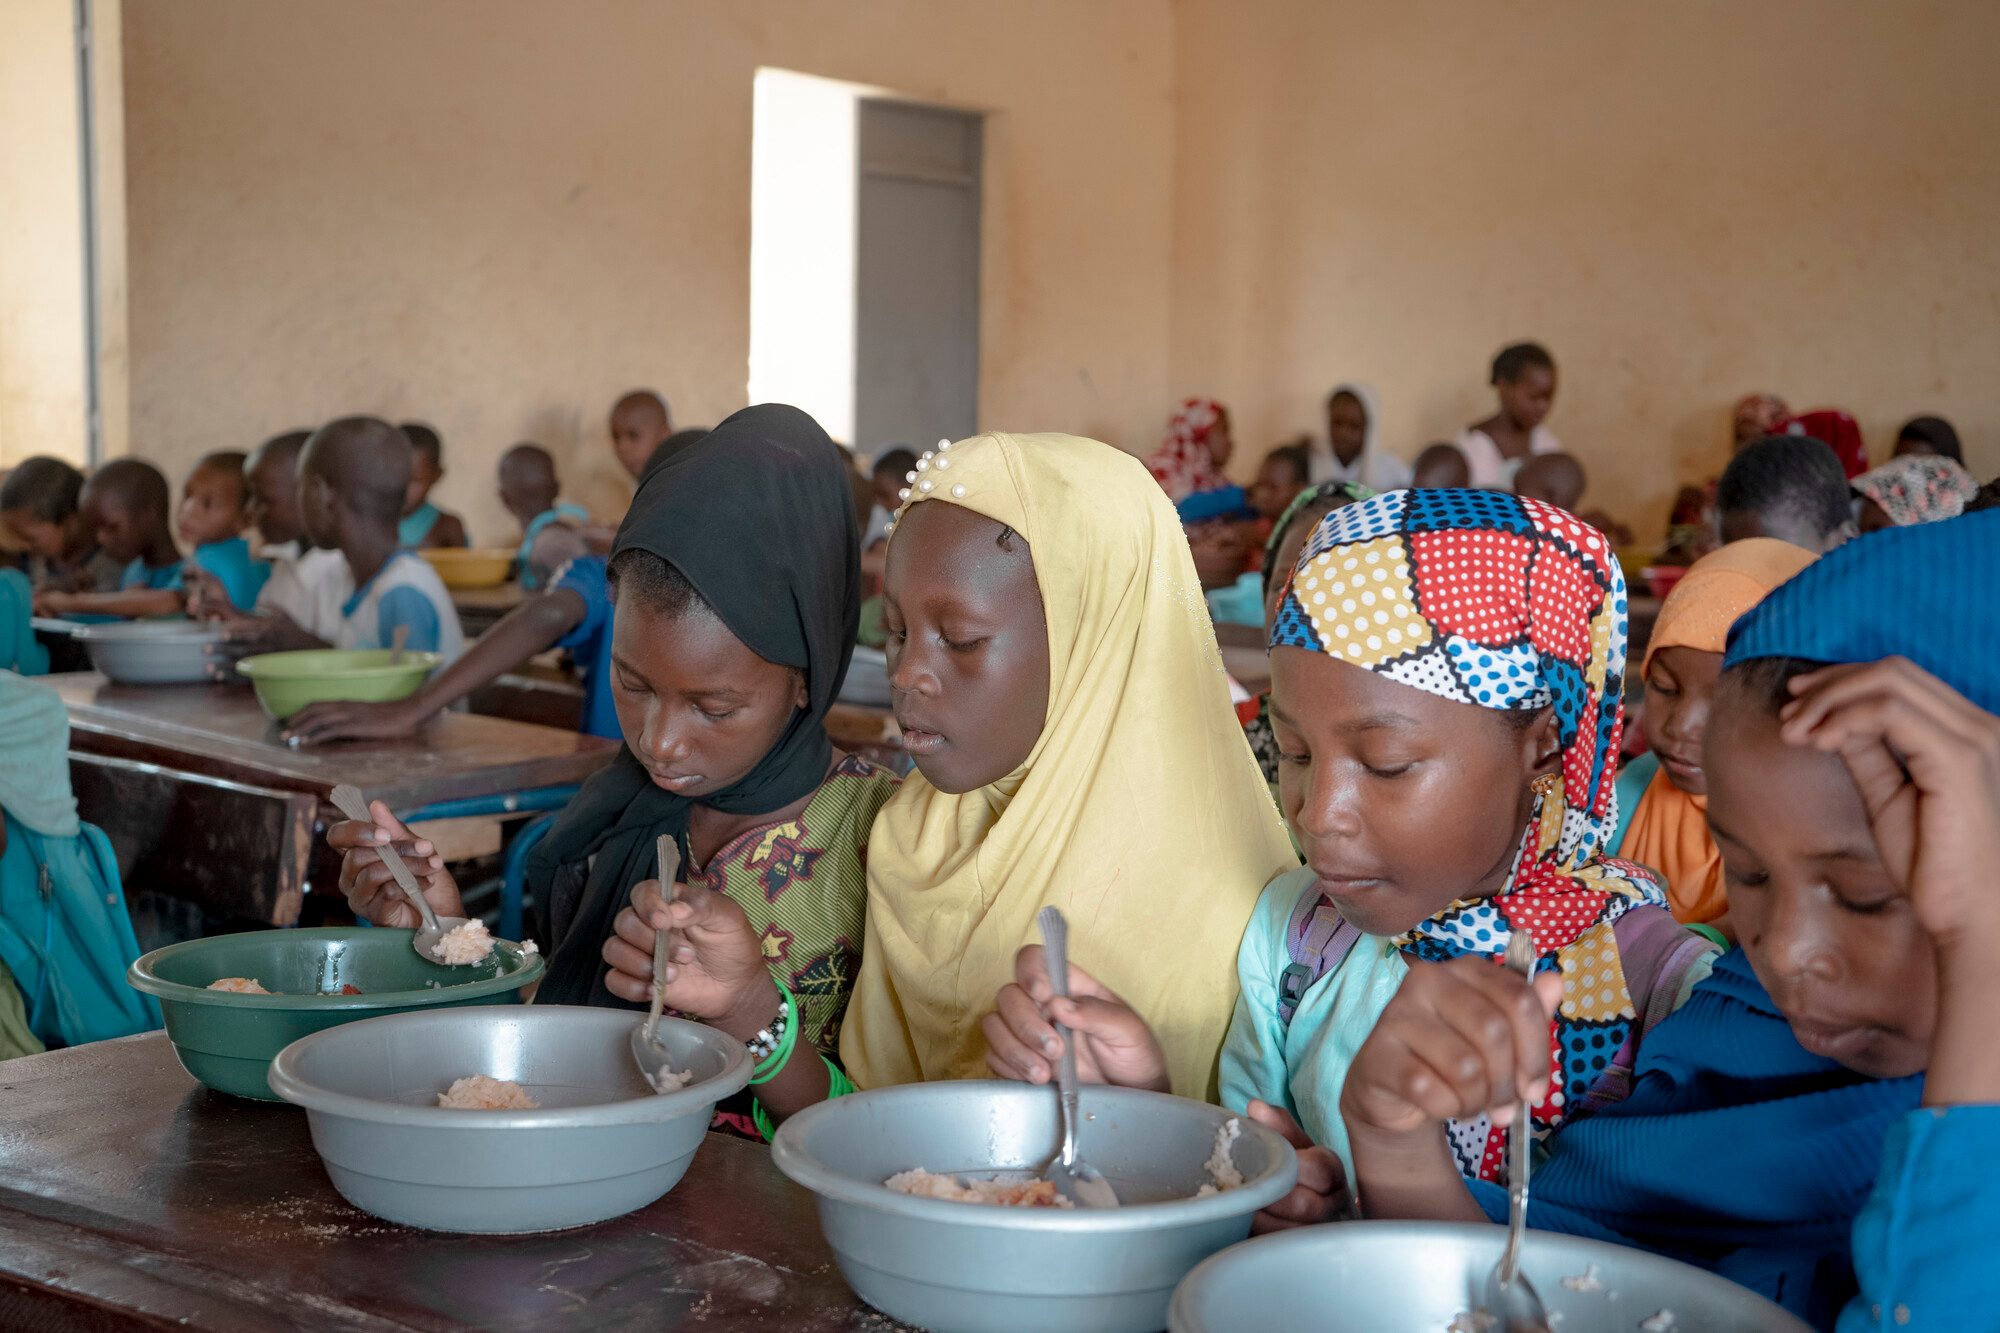 Children eat their lunch in a school classroom.